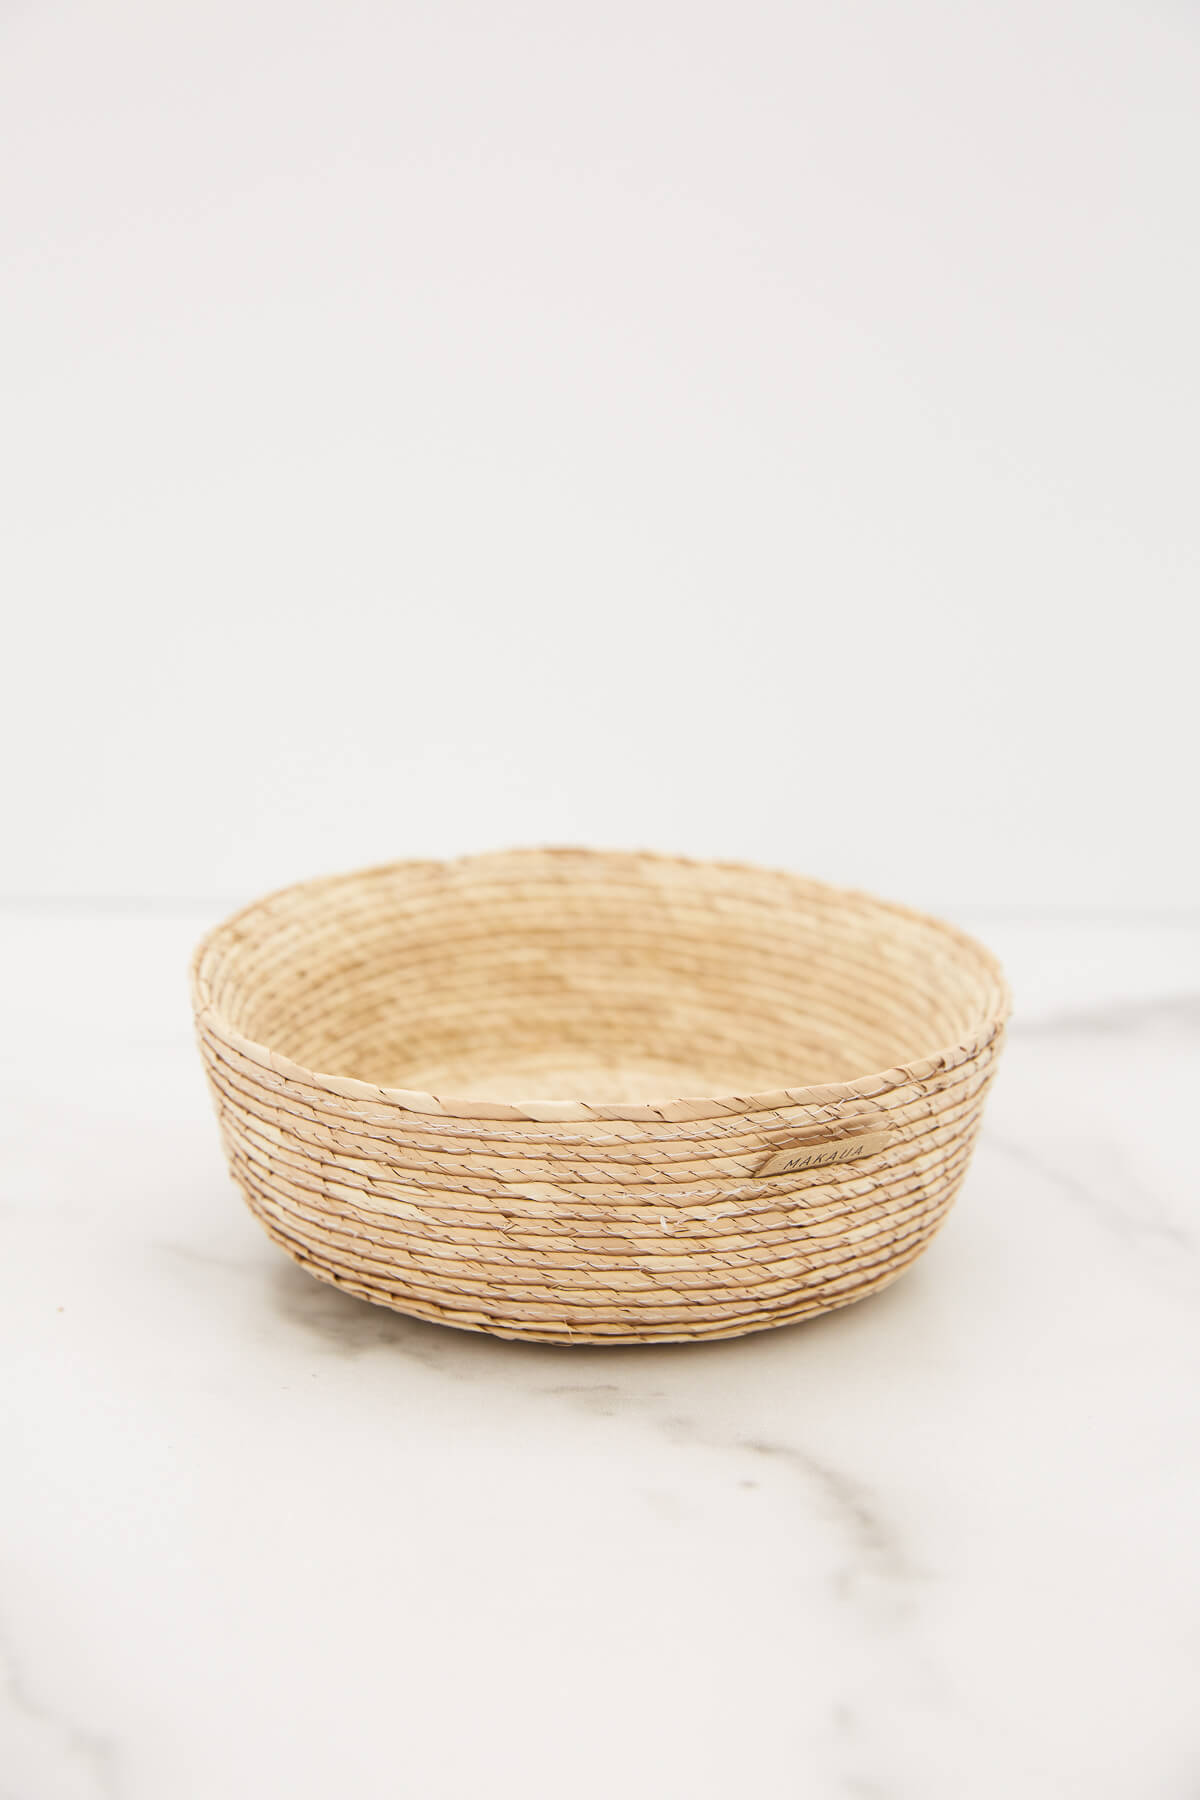 MAKAUA Small Round Basket - Palm and Perkins